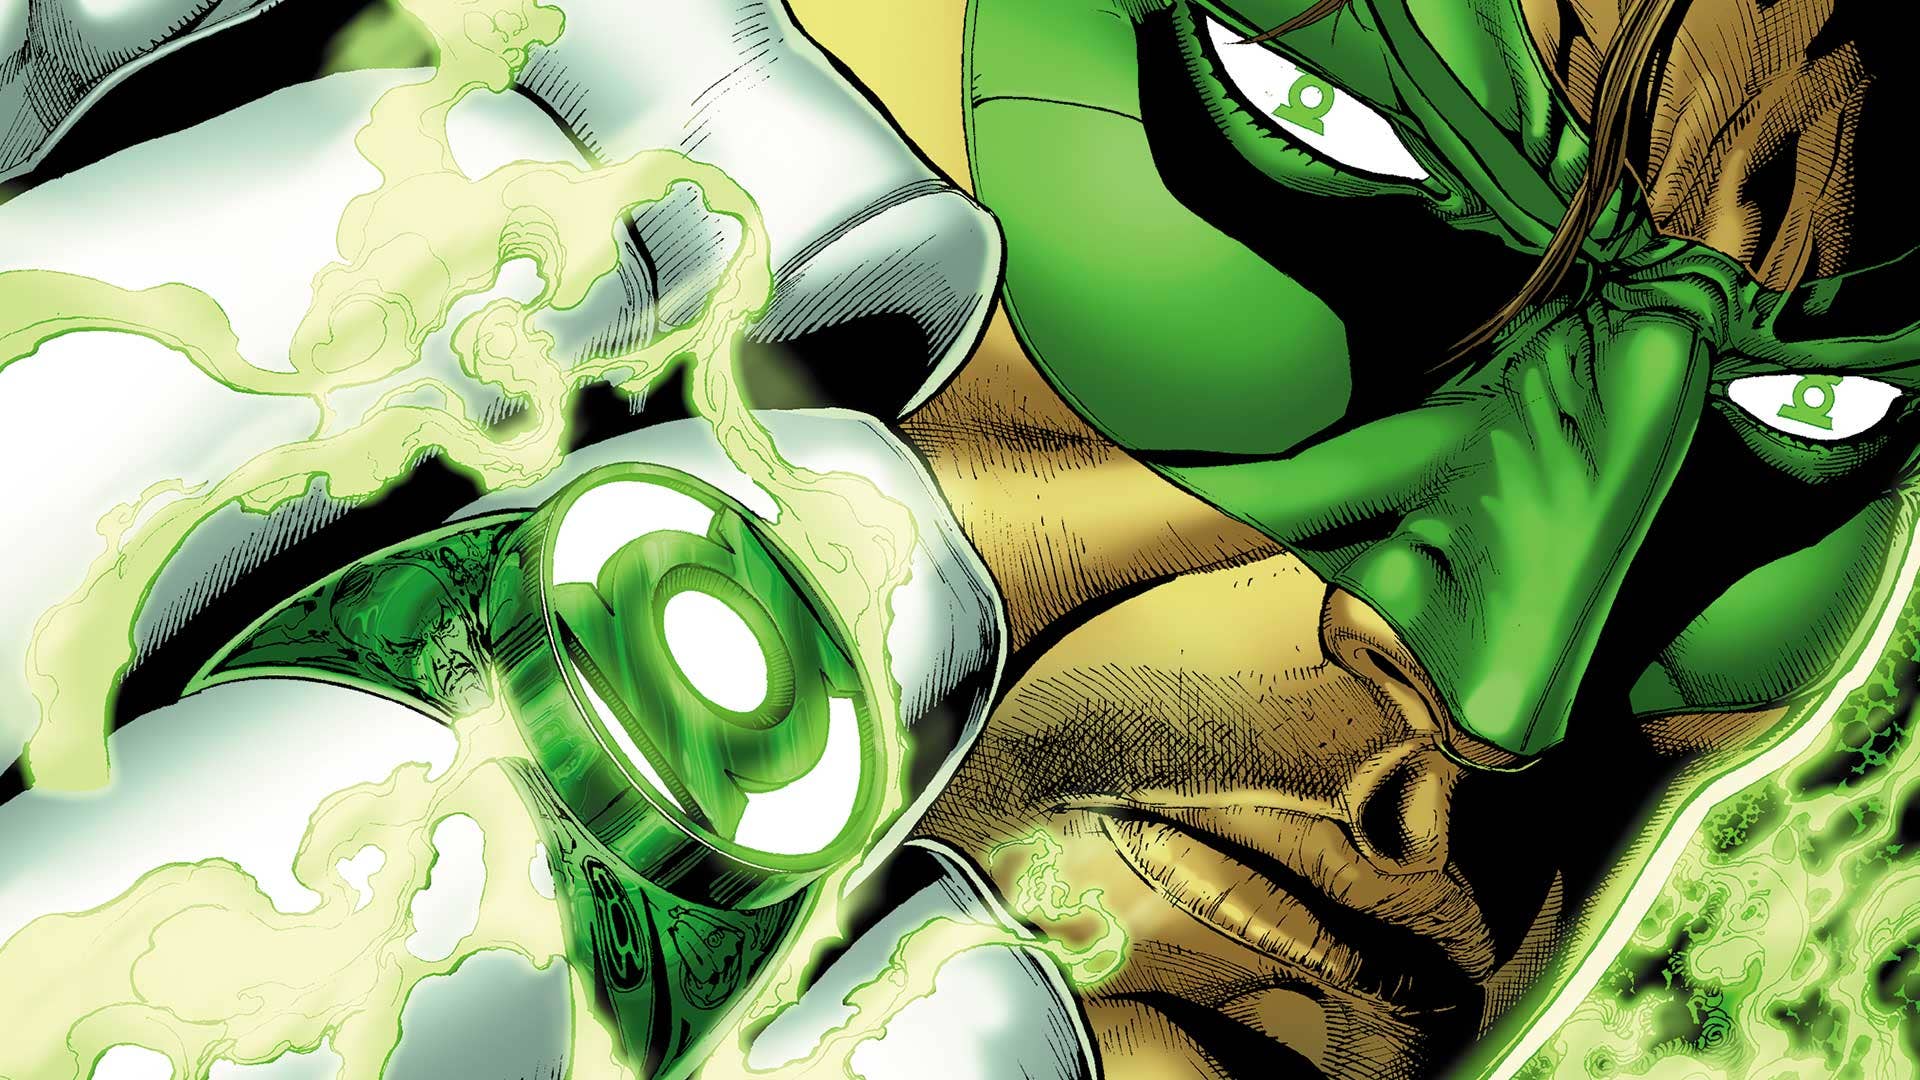 Robert Venditti stays green with Hal Jordan and Green Lantern Corps